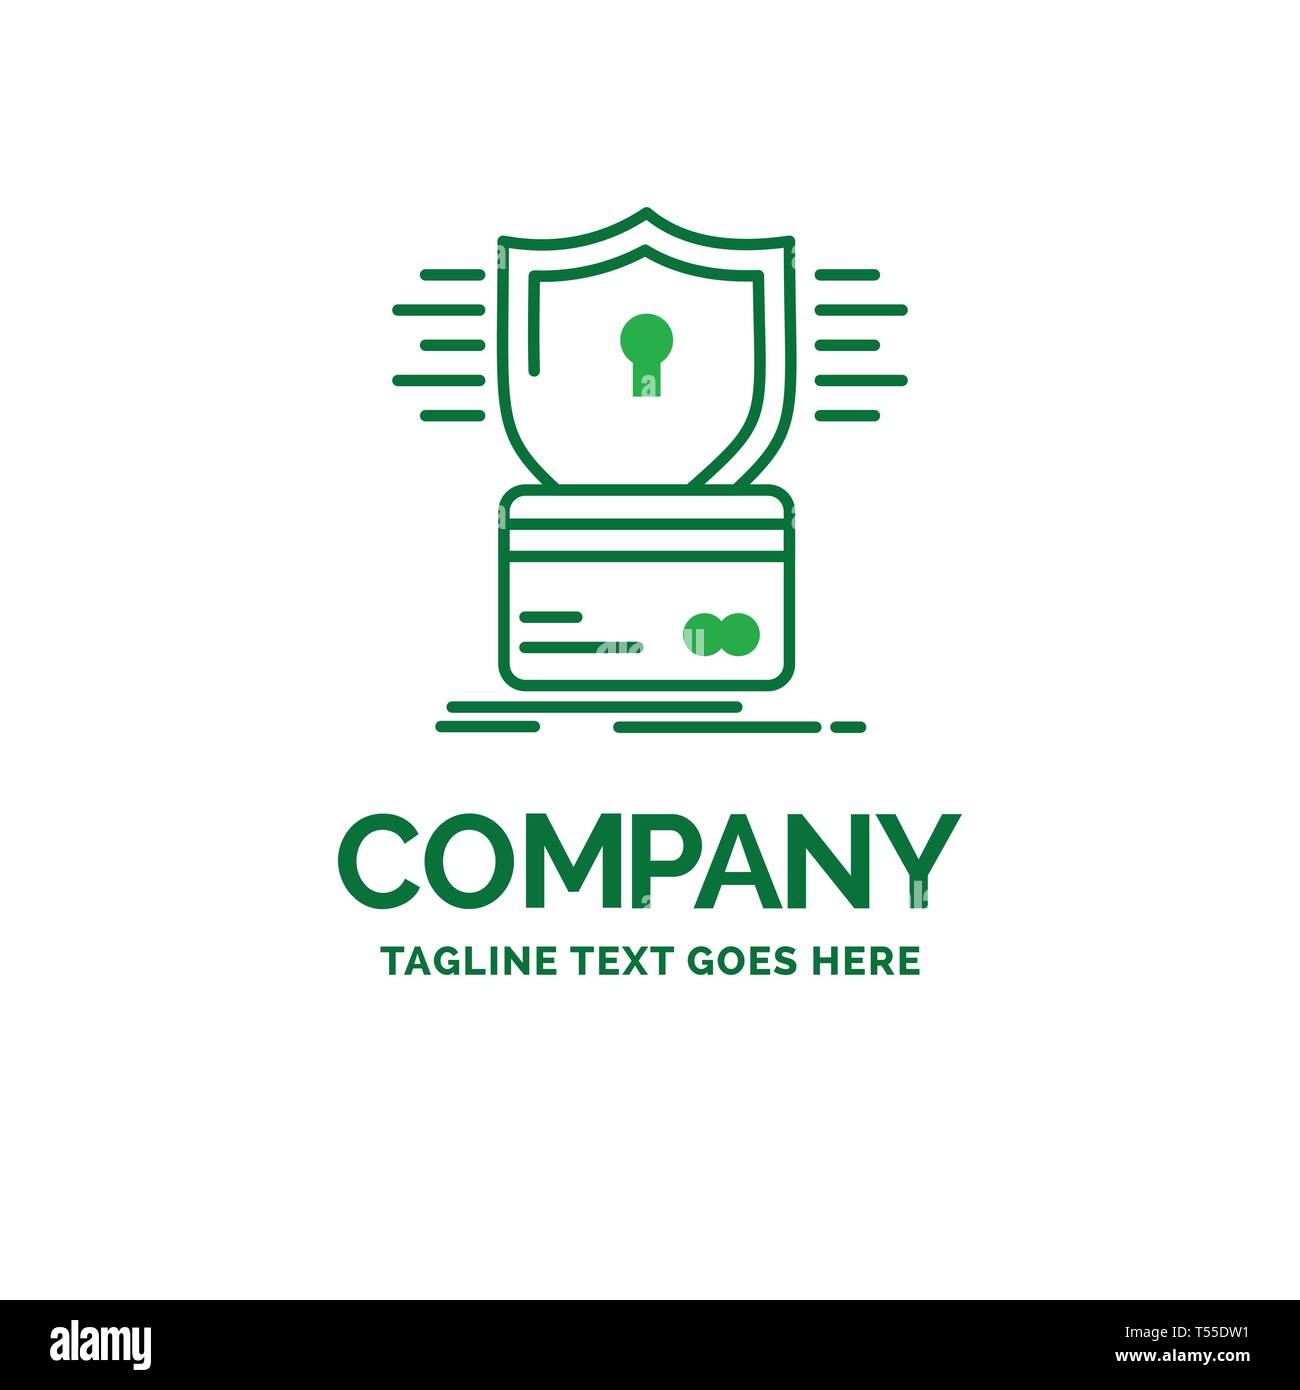 Sicherheit, Kreditkarte, Chipkarte, Hacking, Flachbild Business Logo template Hack. Creative Green Marke Design. Stock Vektor